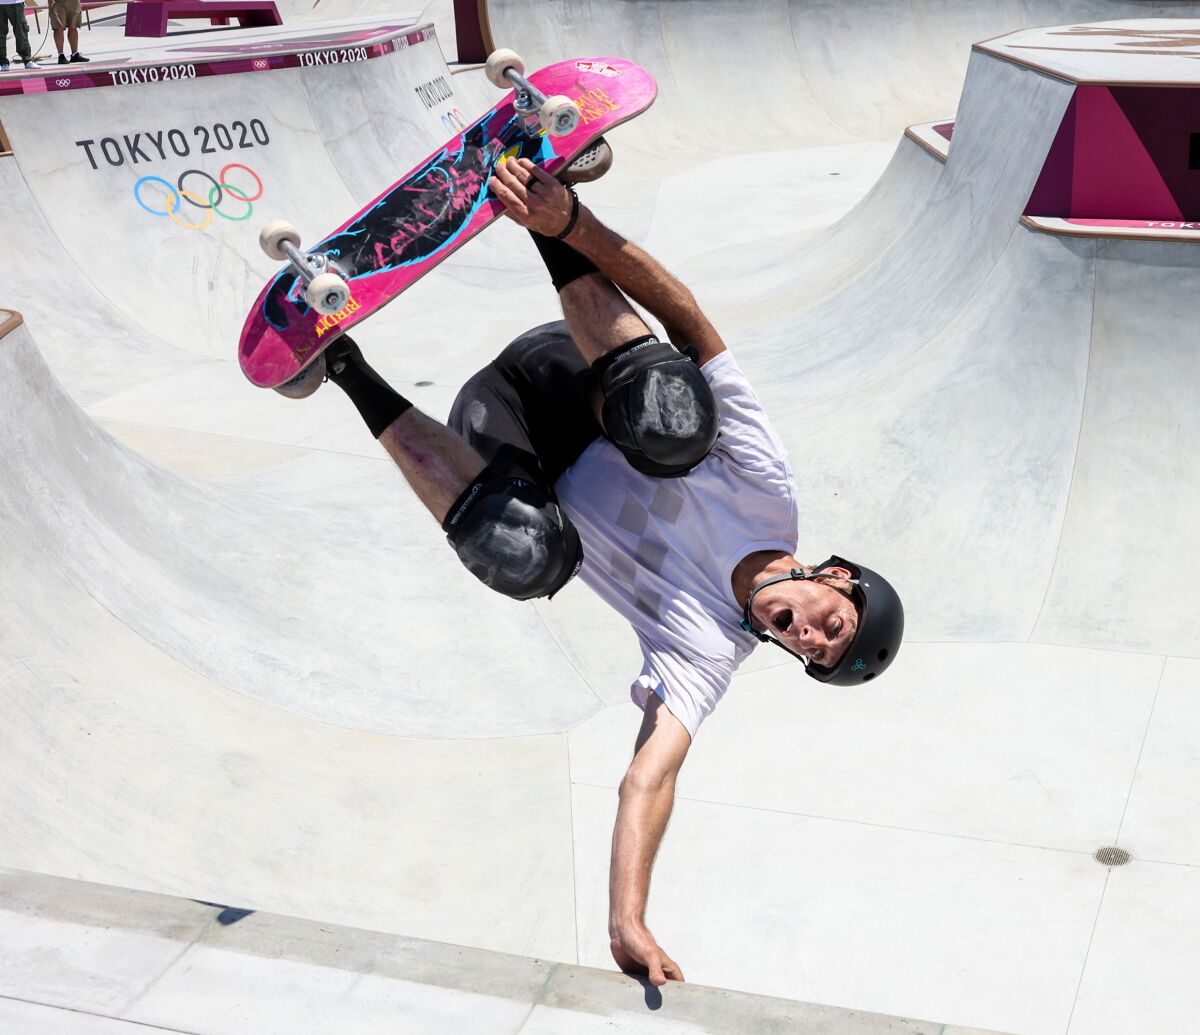 Skating legend Tony Hawk did some skateboarding at Ariake Urban Sports Park on Friday.